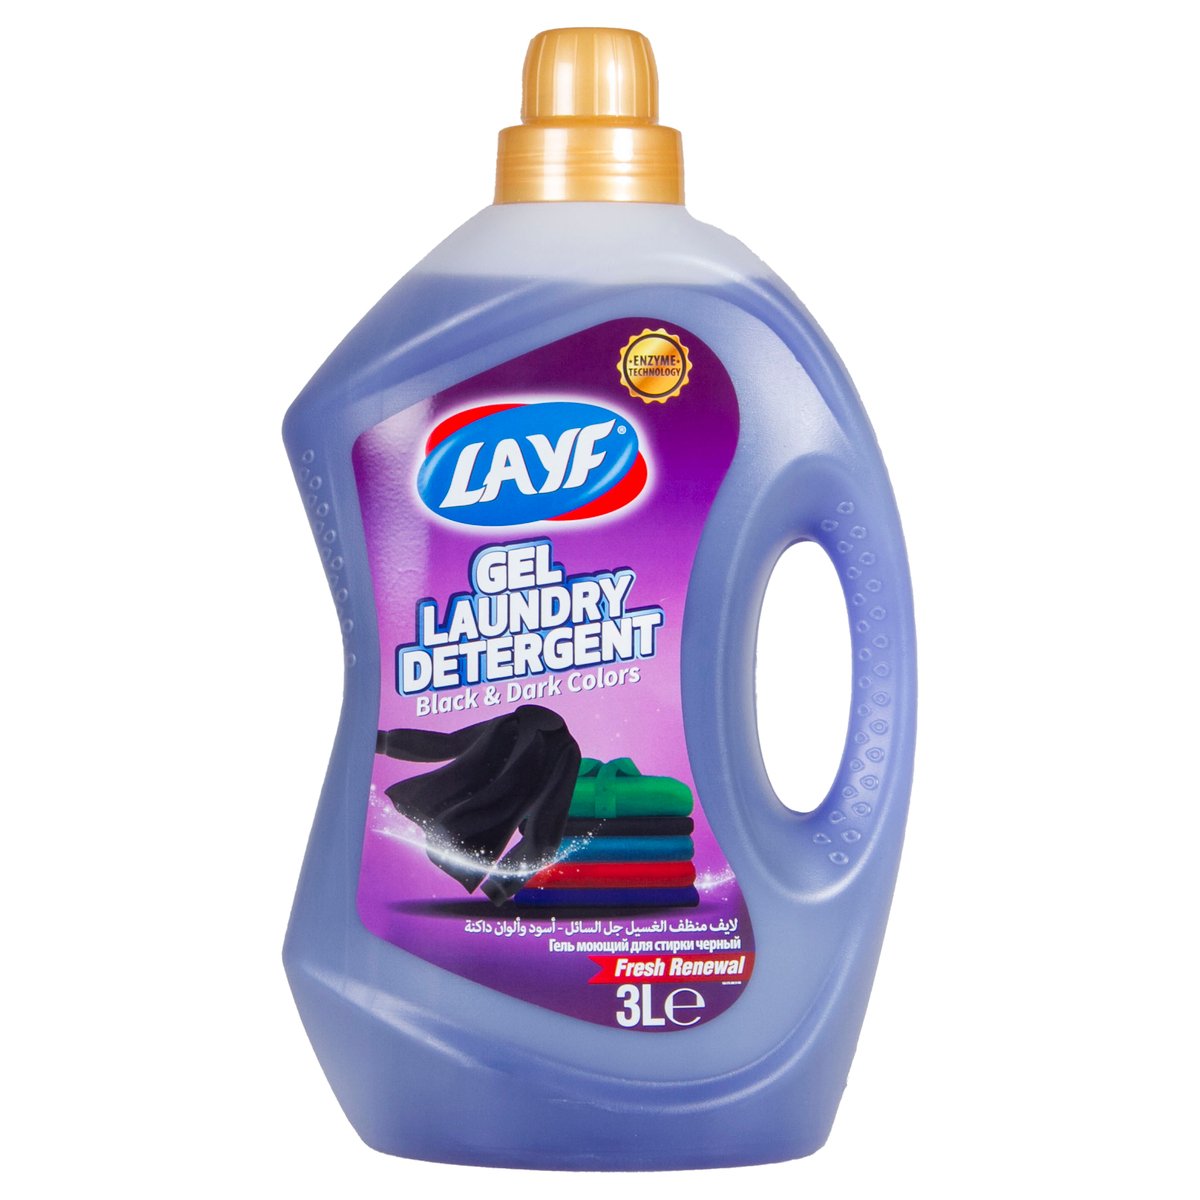 Layf Laundry Detergent Gel Black & Dark Colors 3 Litres